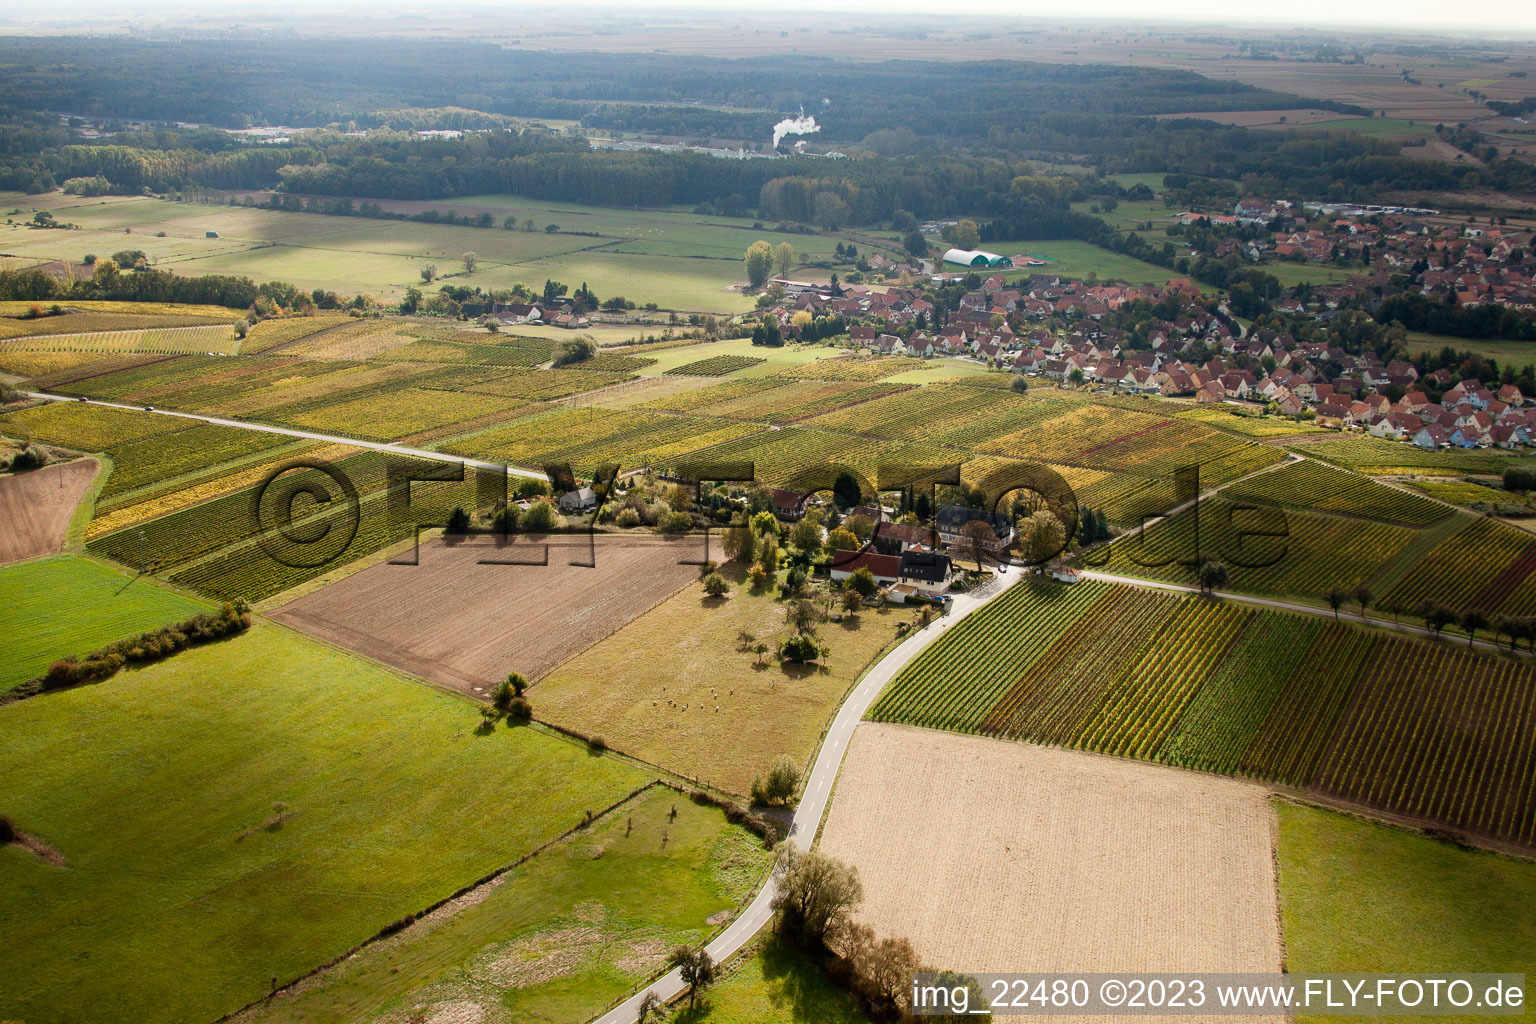 Windhof in Schweighofen in the state Rhineland-Palatinate, Germany